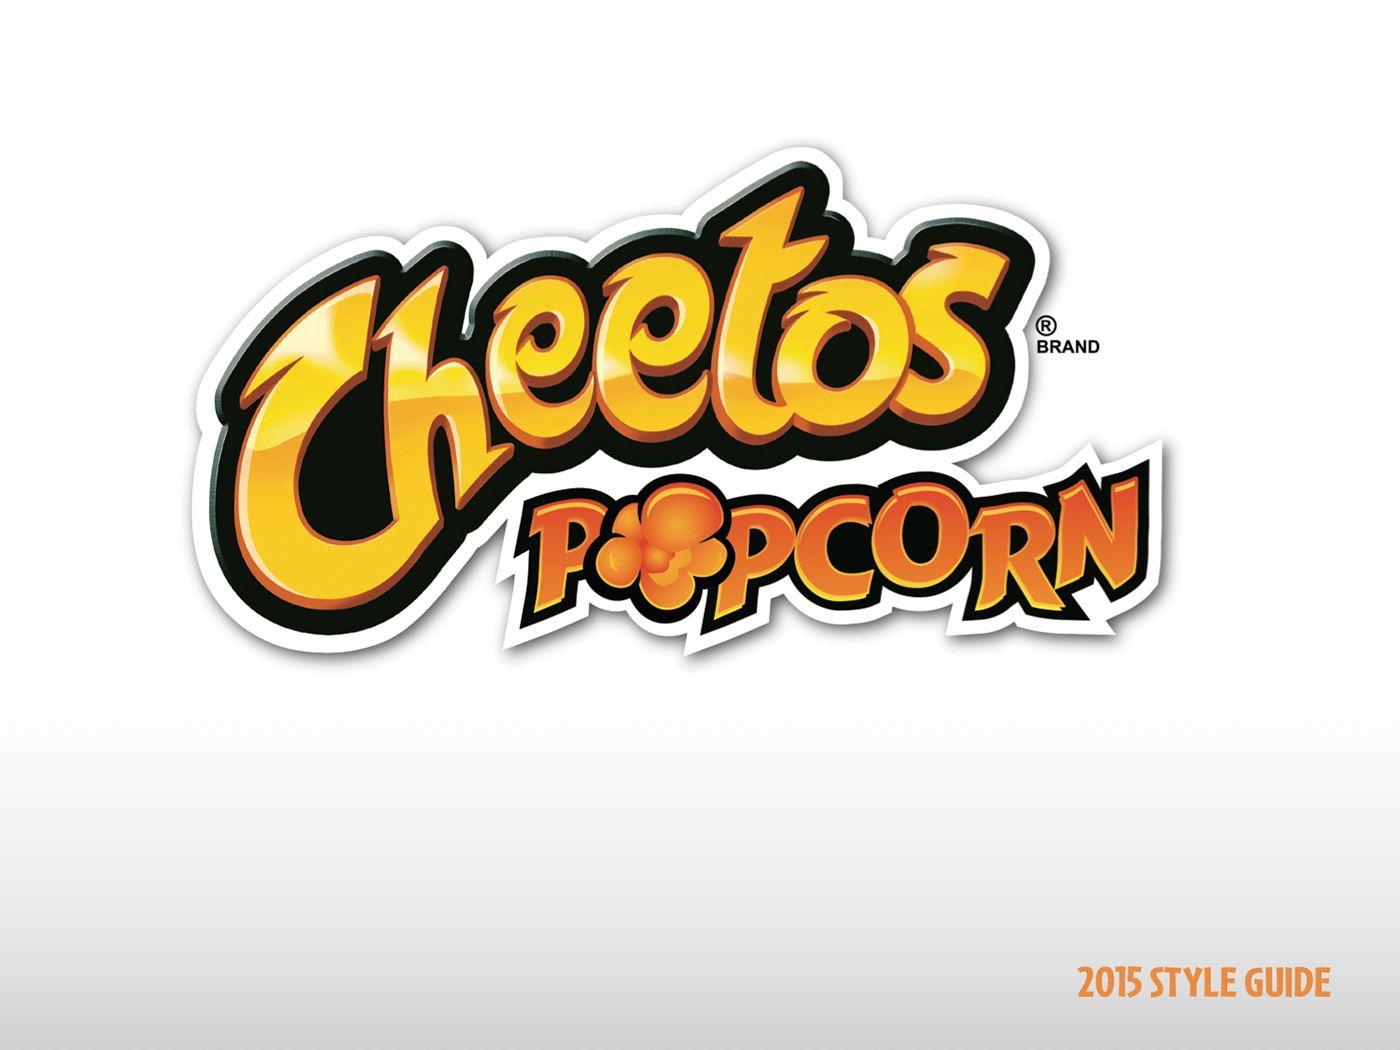 Chettos Logo - CHEETOS POPCORN LOGO & STYLE GUIDE on Behance